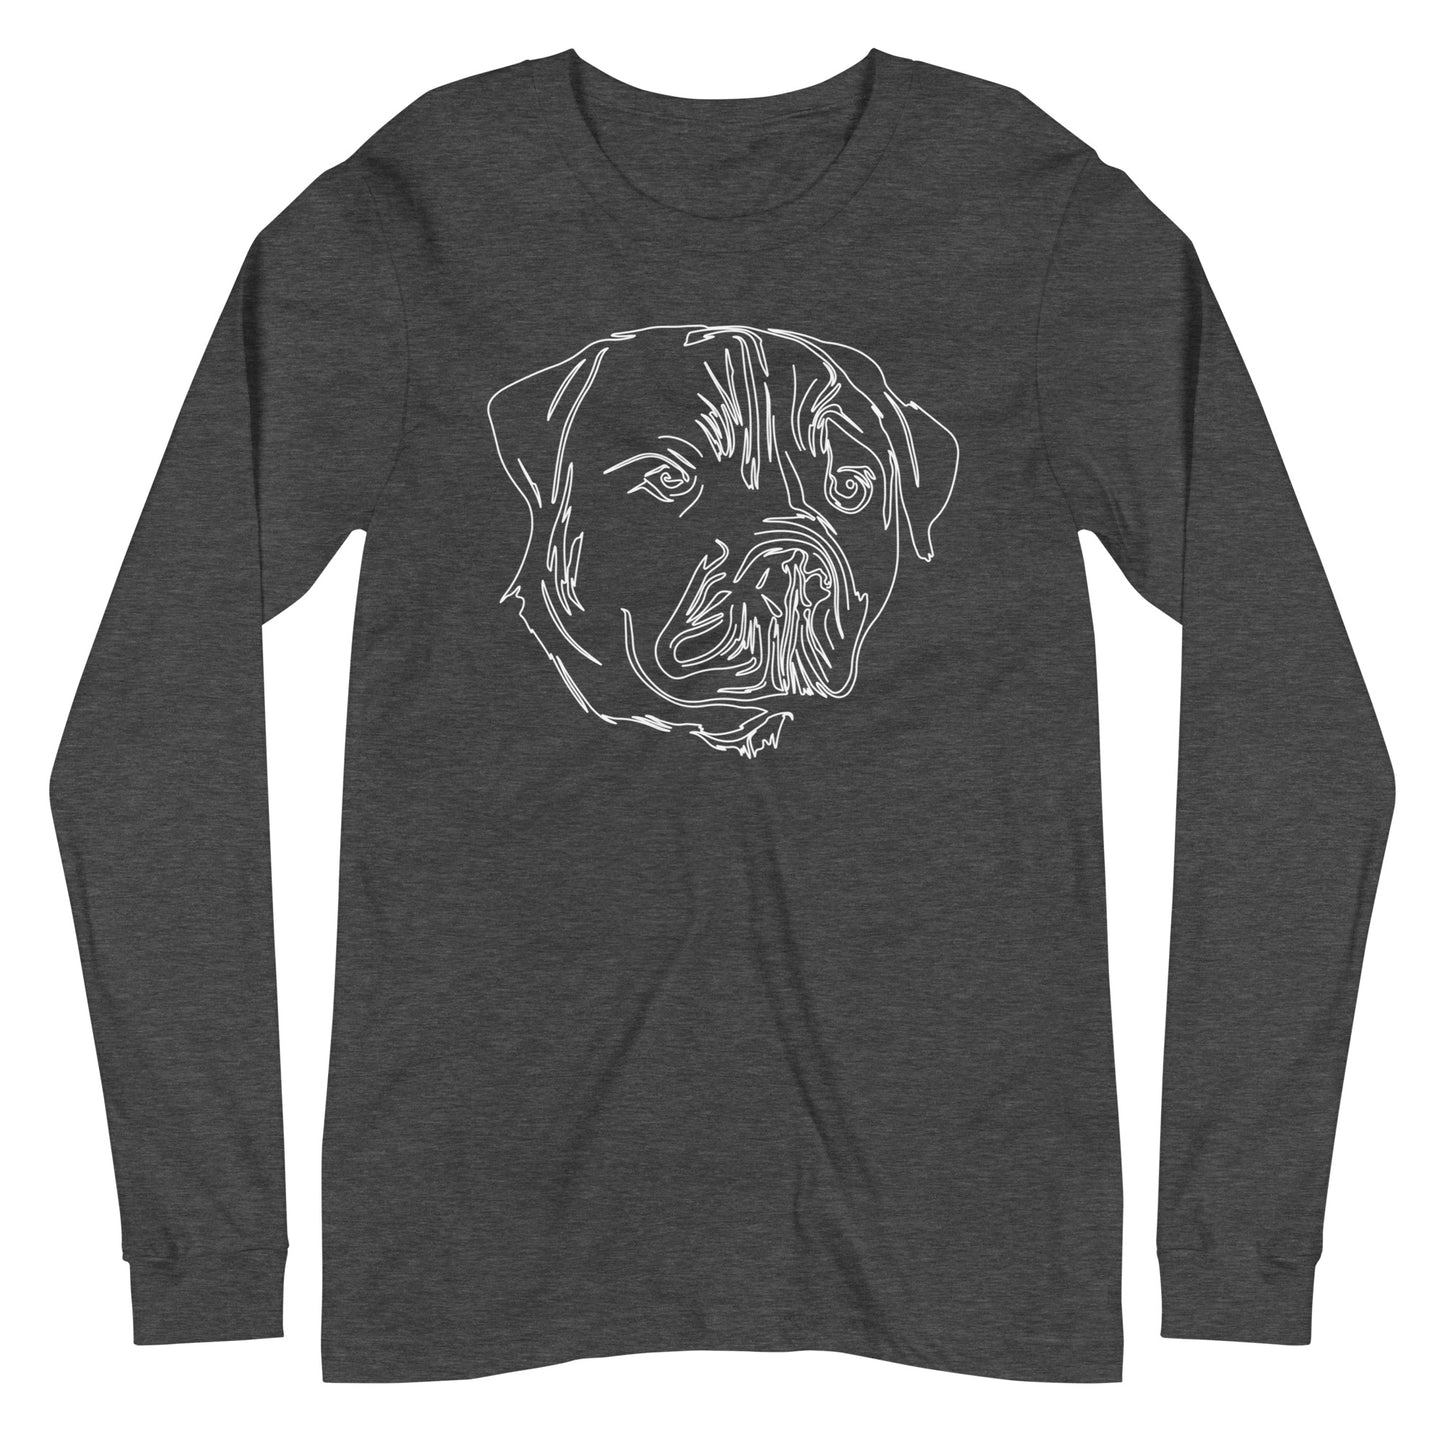 White line Rottweiler face on unisex dark grey heather long sleeve t-shirt